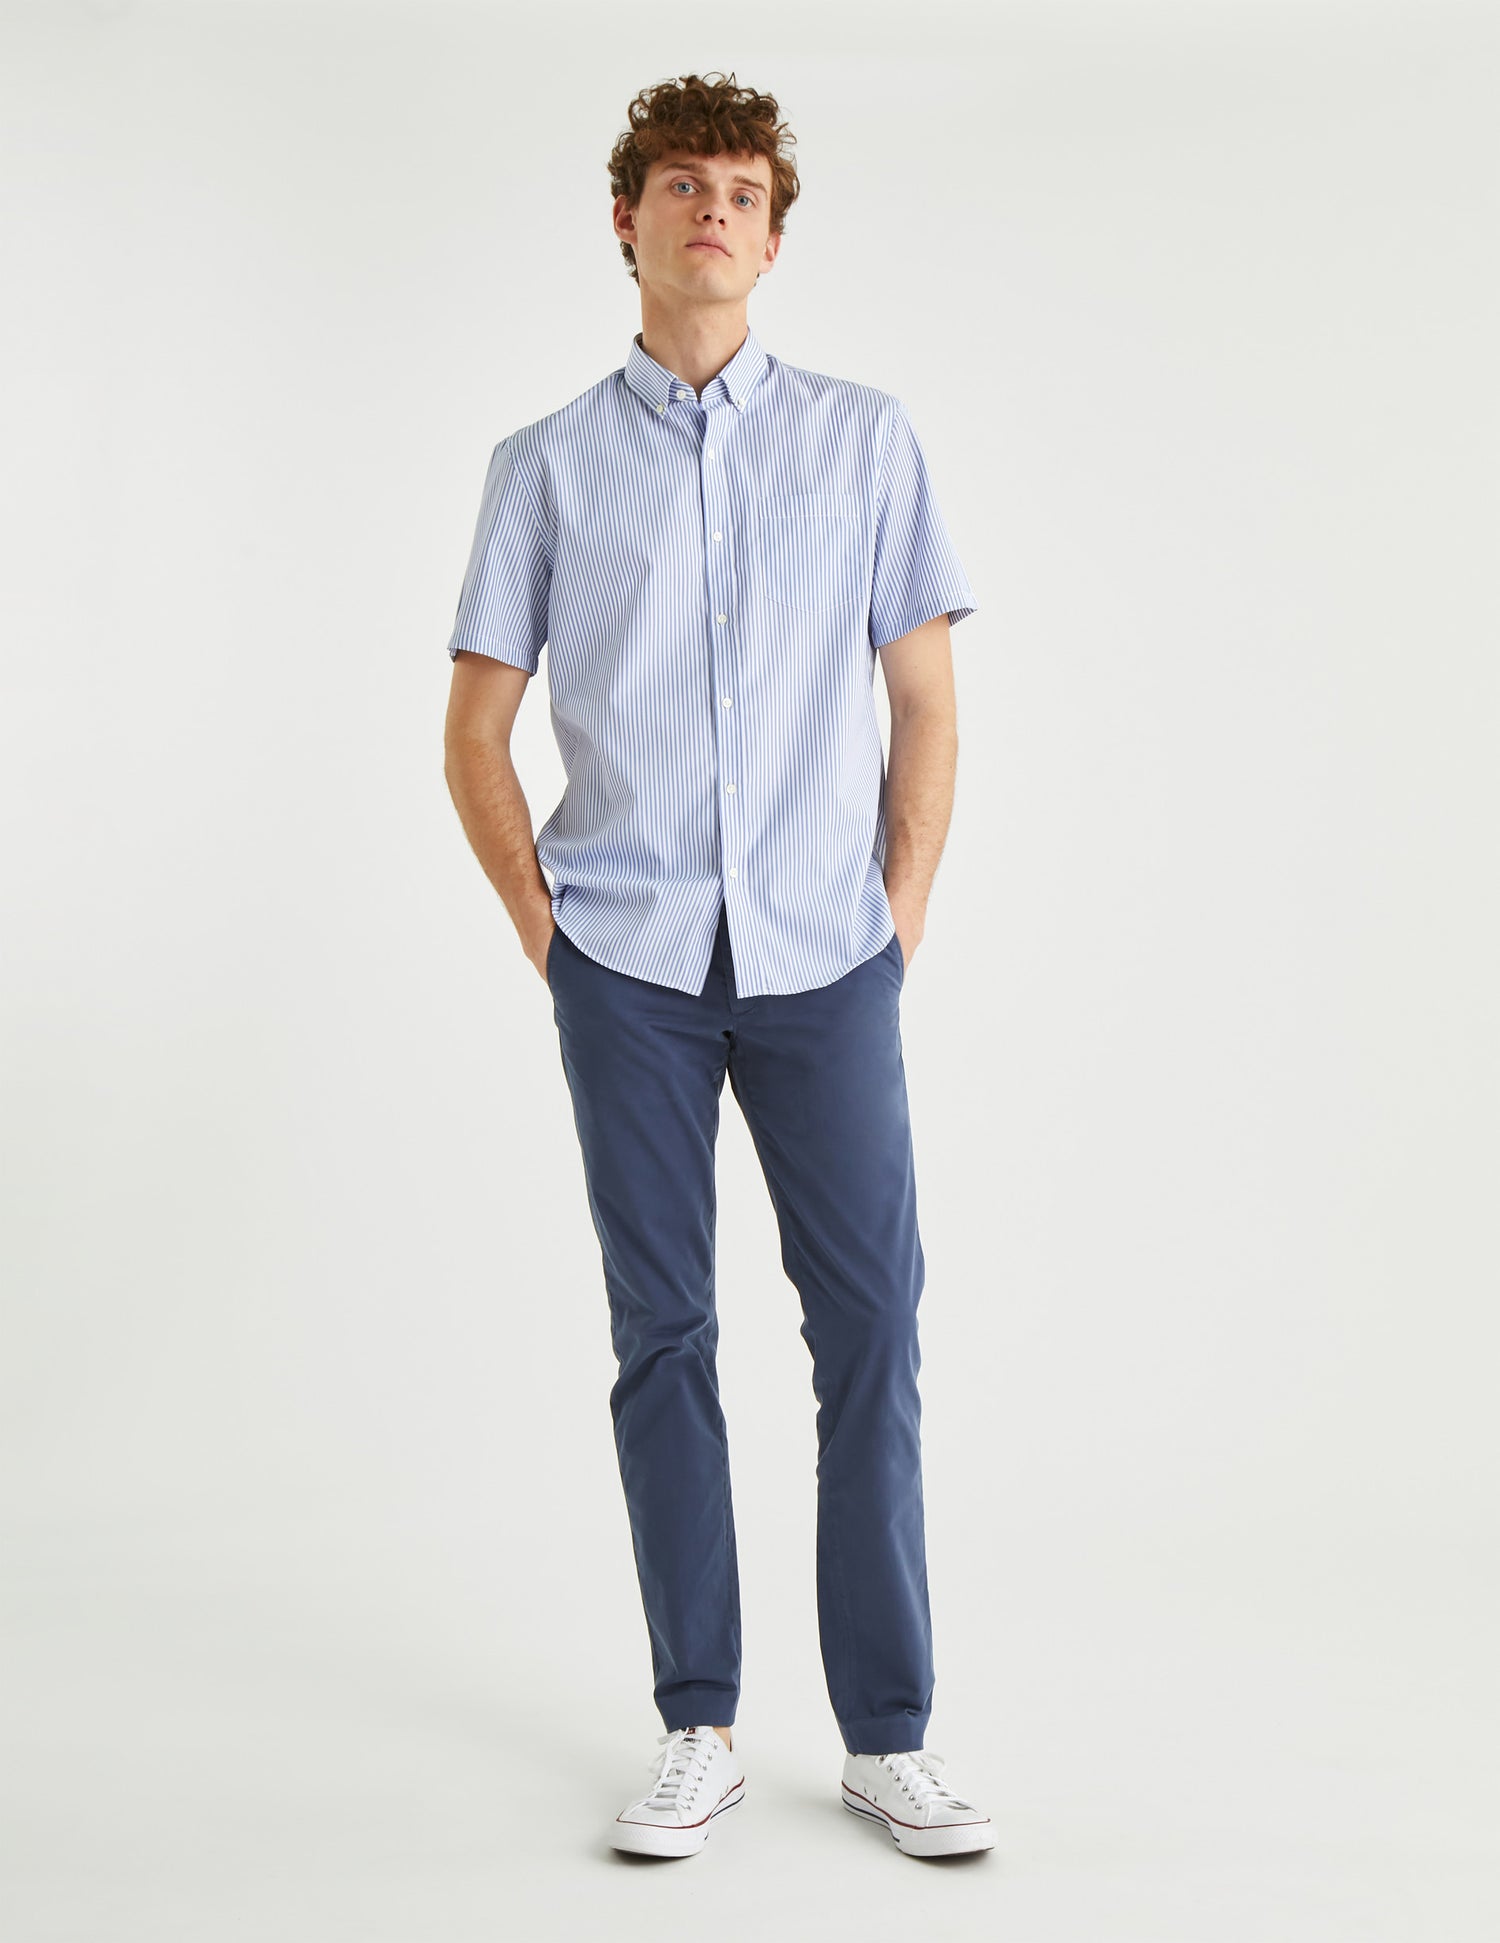 Classic blue striped short-sleeved shirt - Poplin - American Collar#5